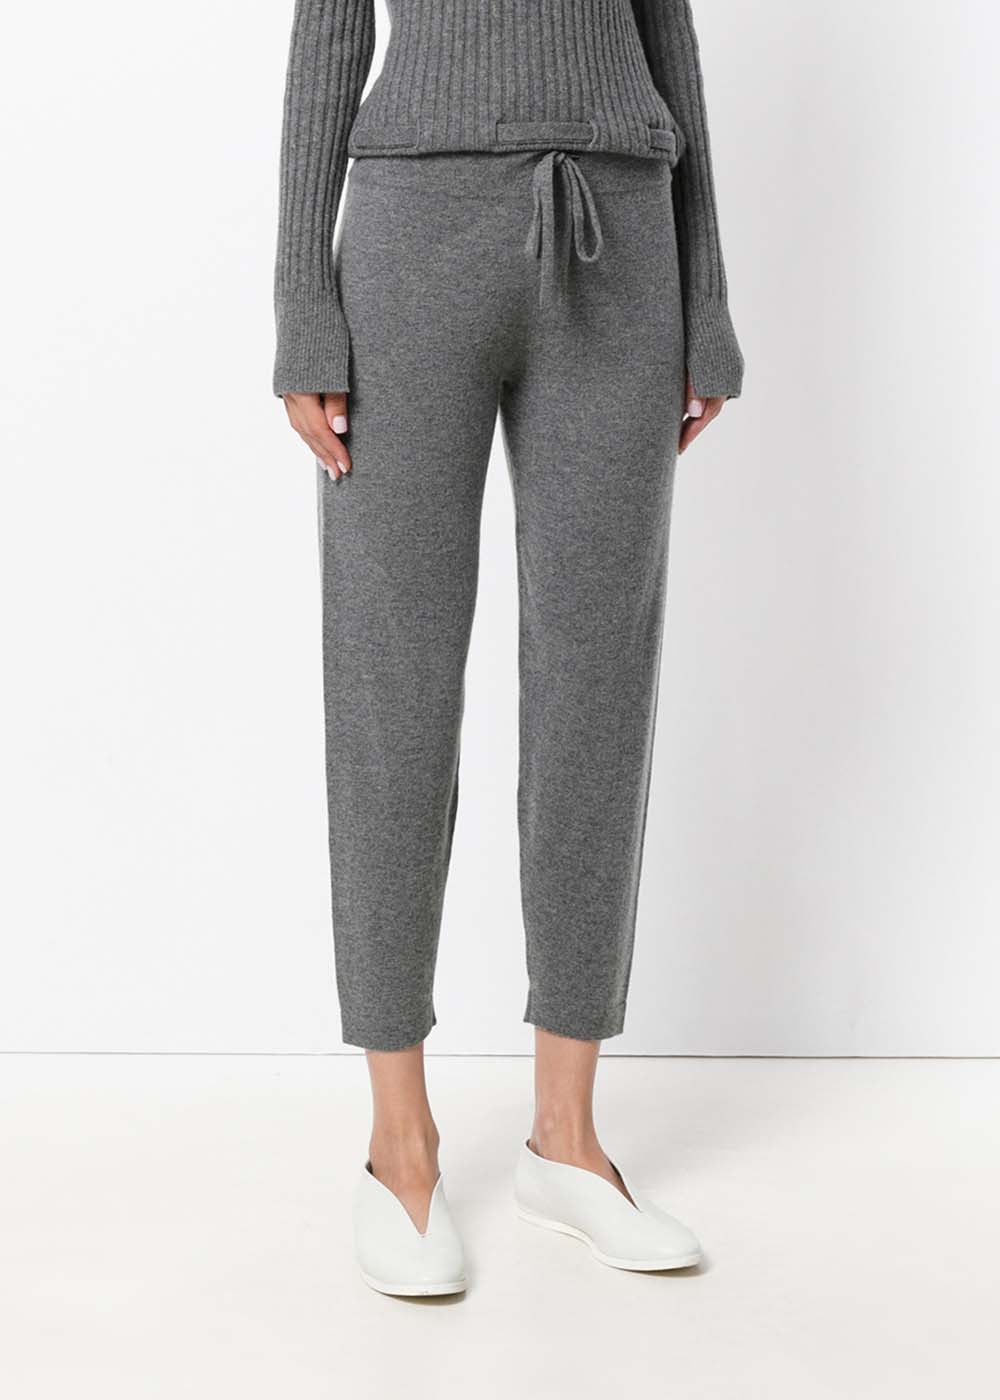 Sarah Knit Trousers - Small / Ash Grey